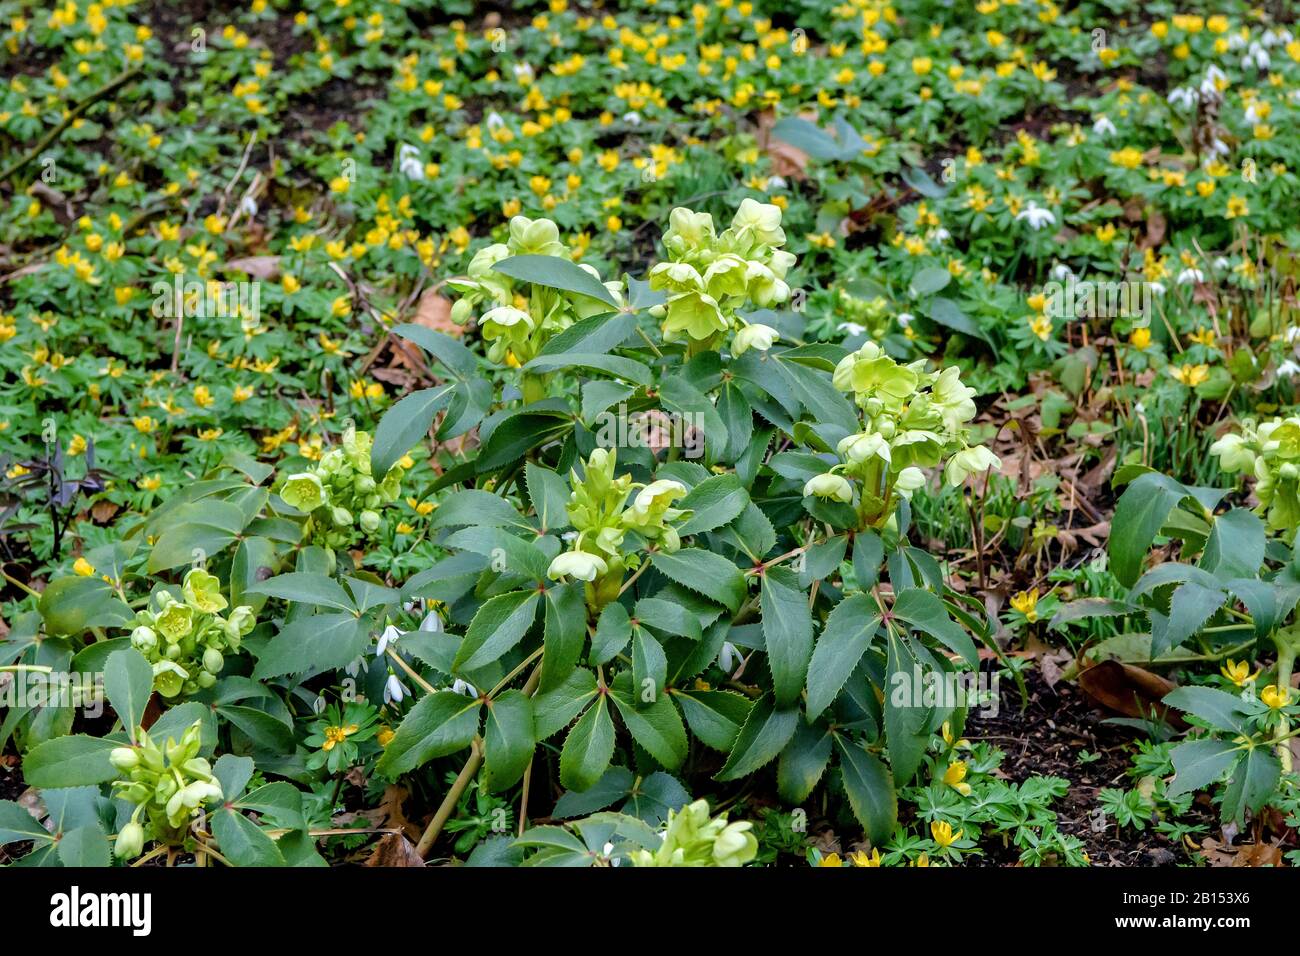 Holly-leaved hellebore, Corsican hellebore (Helleborus argutifolius), blooming, United Kingdom, England Stock Photo